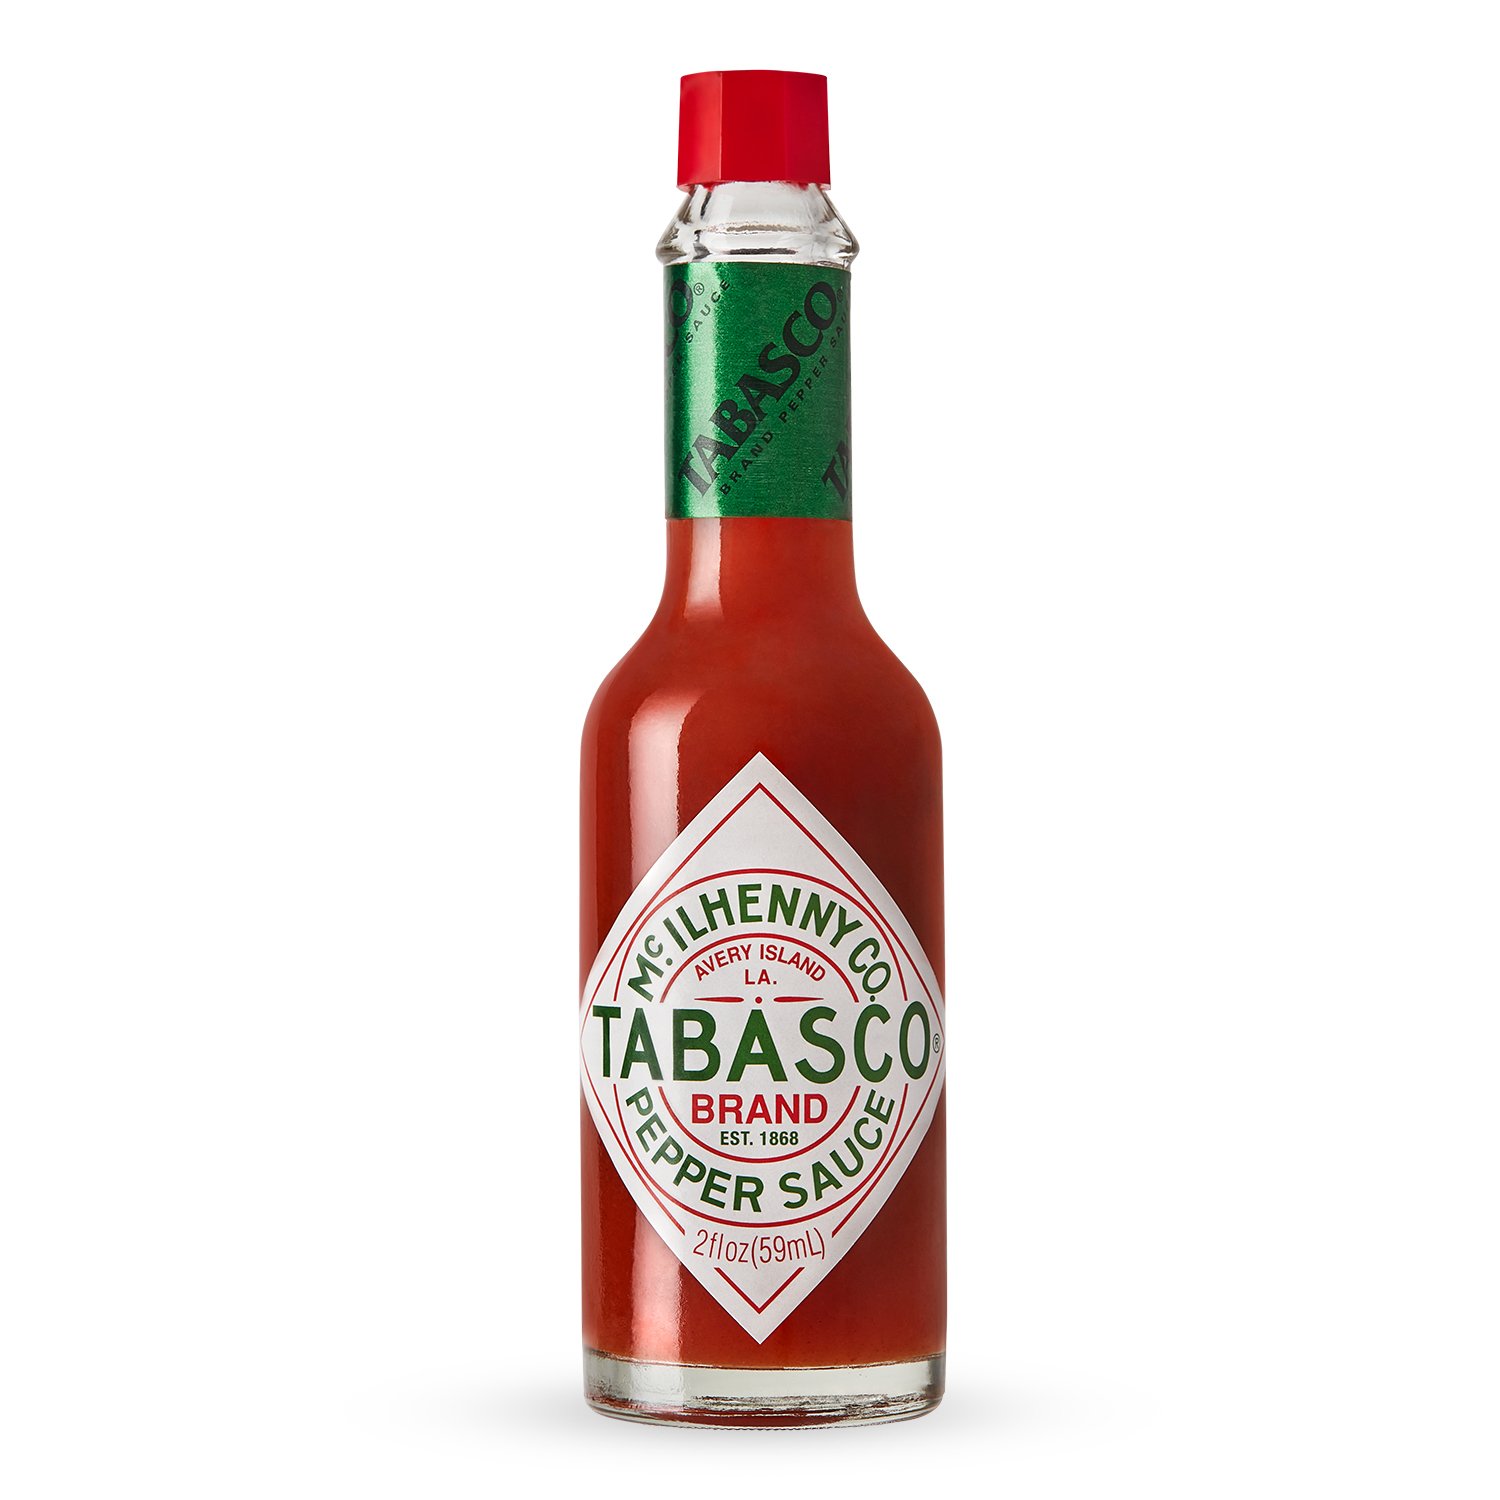 Tabasco Original Red Pepper Sauce - Shop Hot Sauce at H-E-B